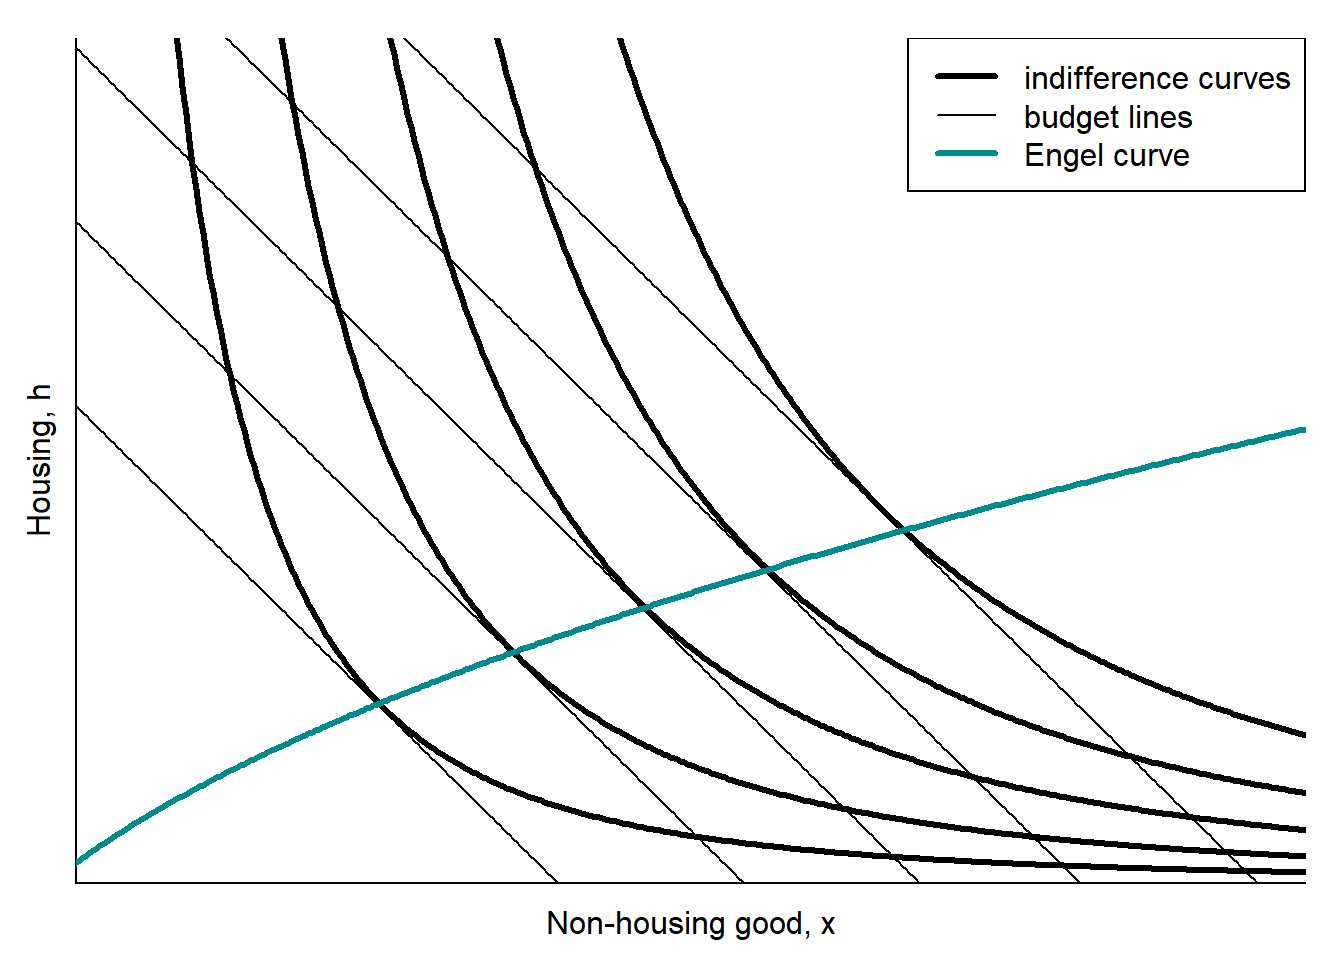 Engel curve for housing